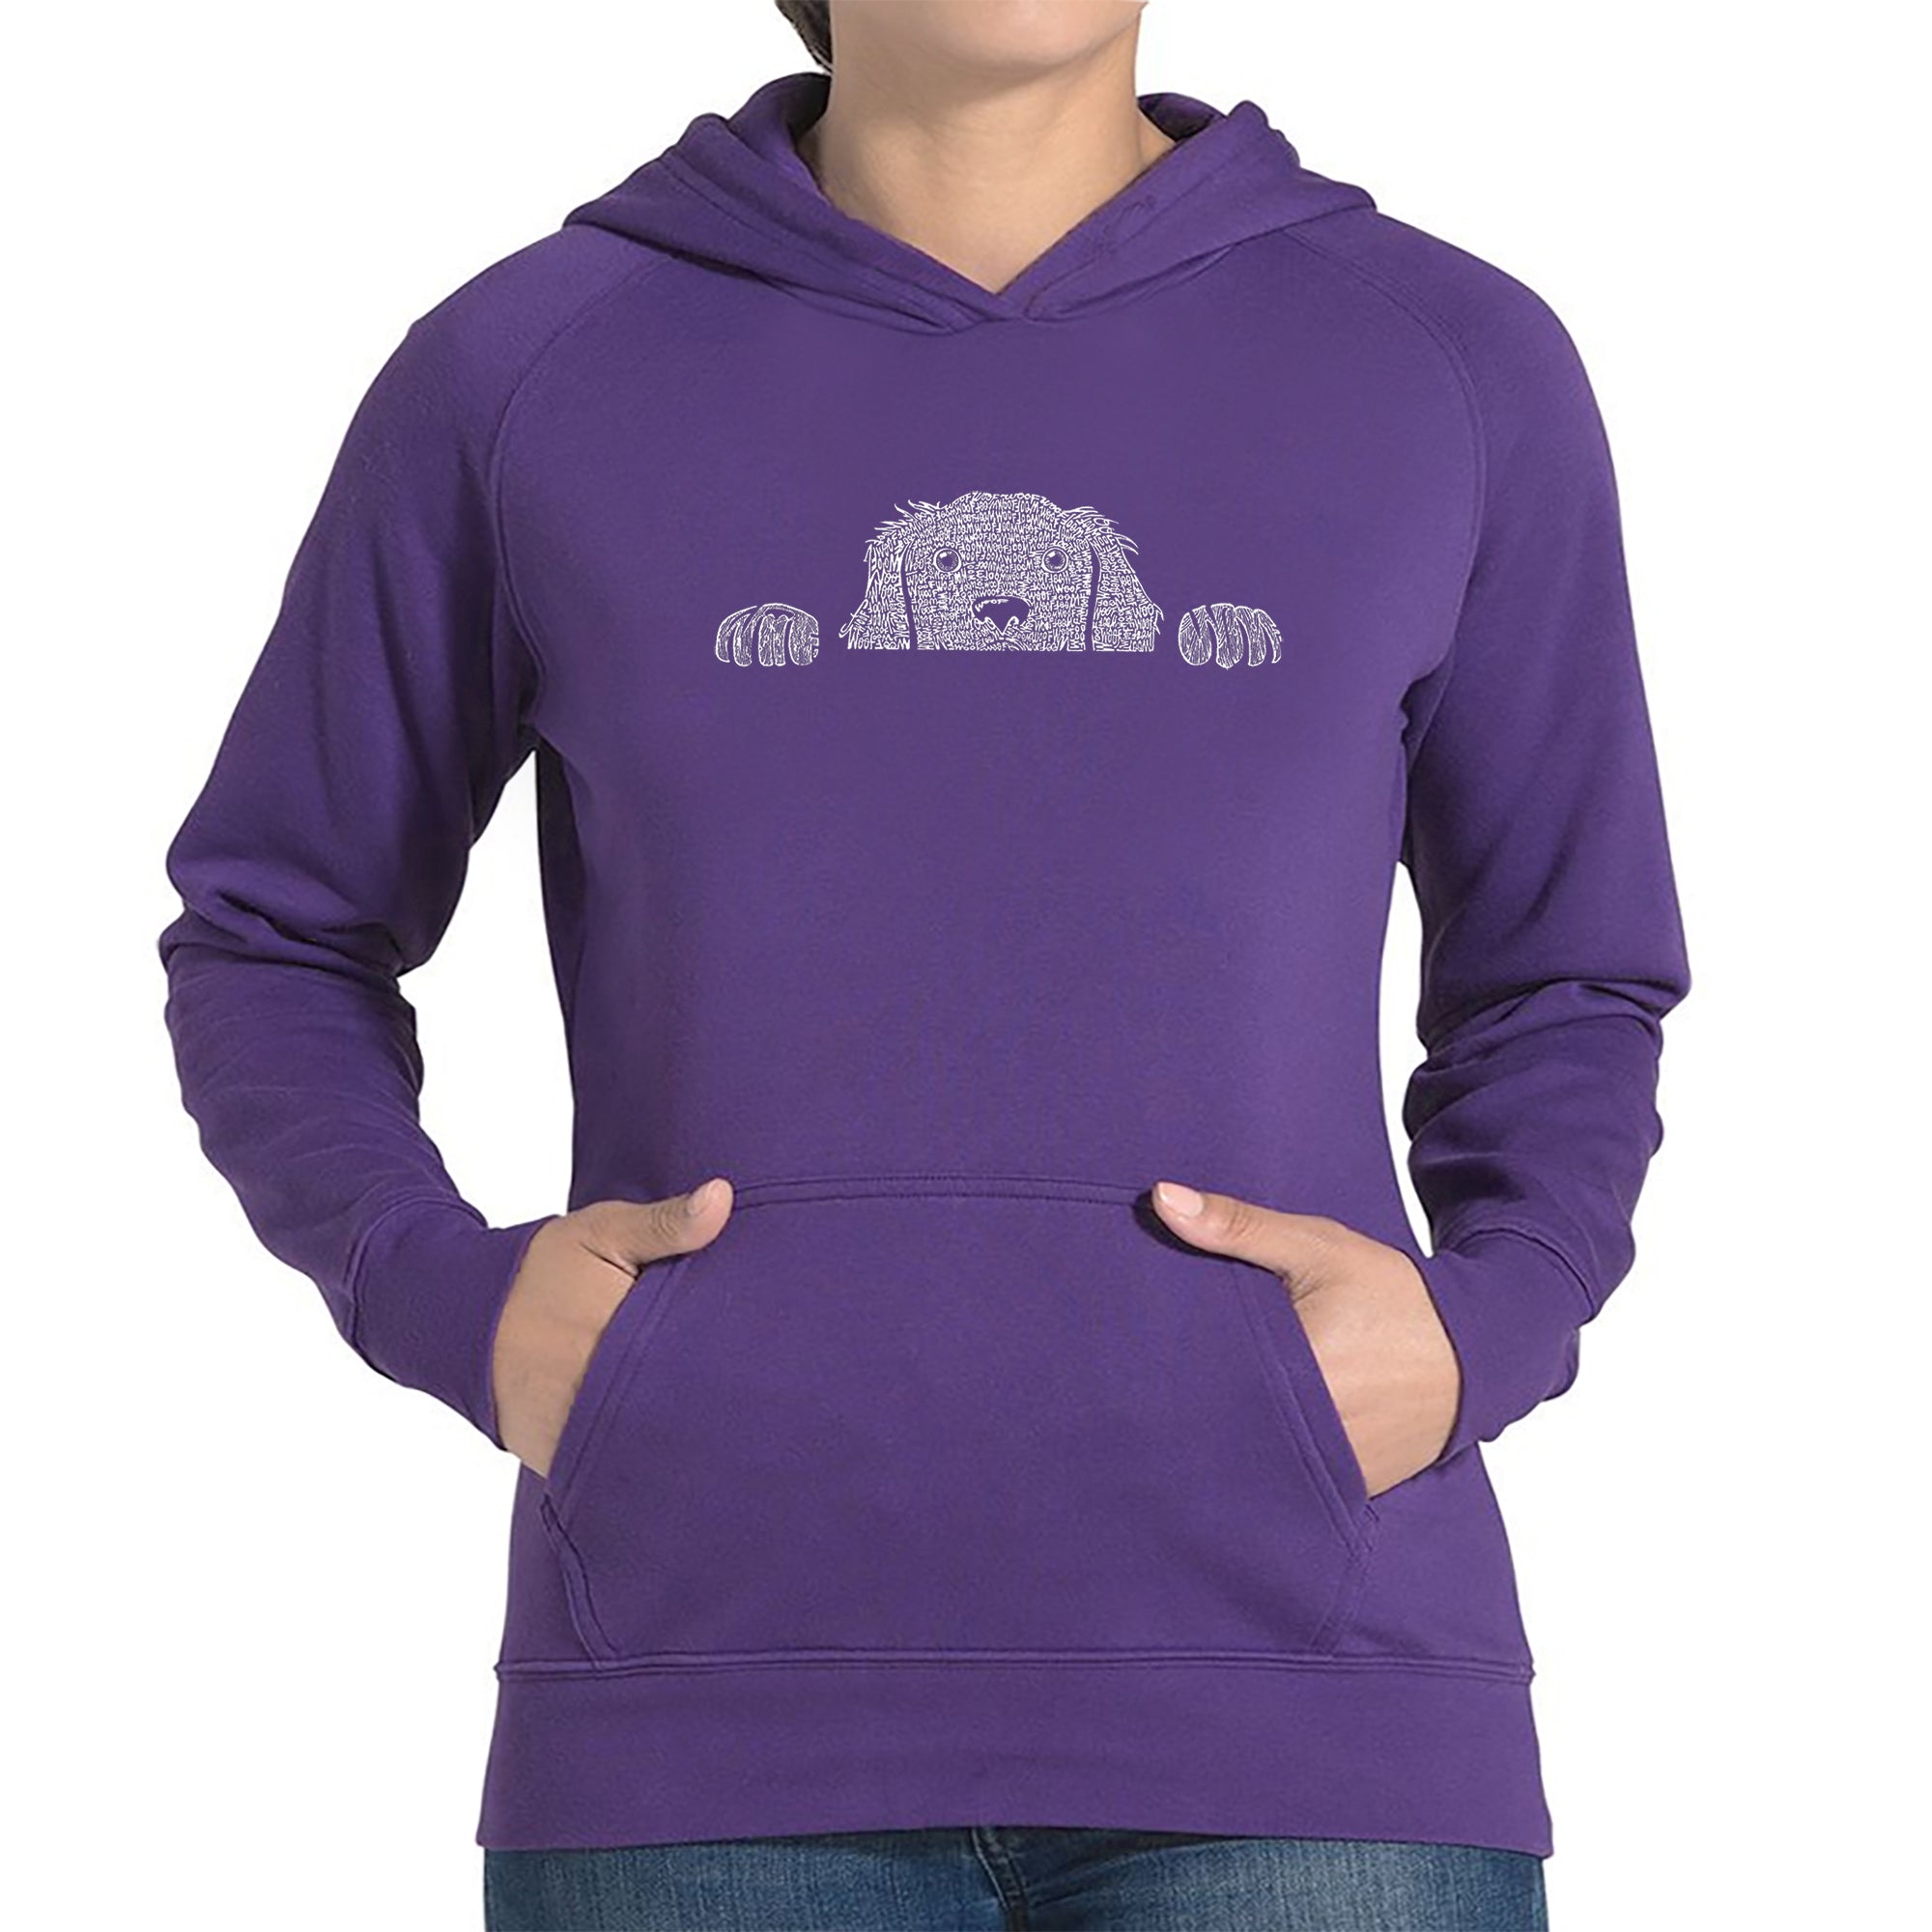 Peeking Dog - Women's Word Art Hooded Sweatshirt - Purple - Medium